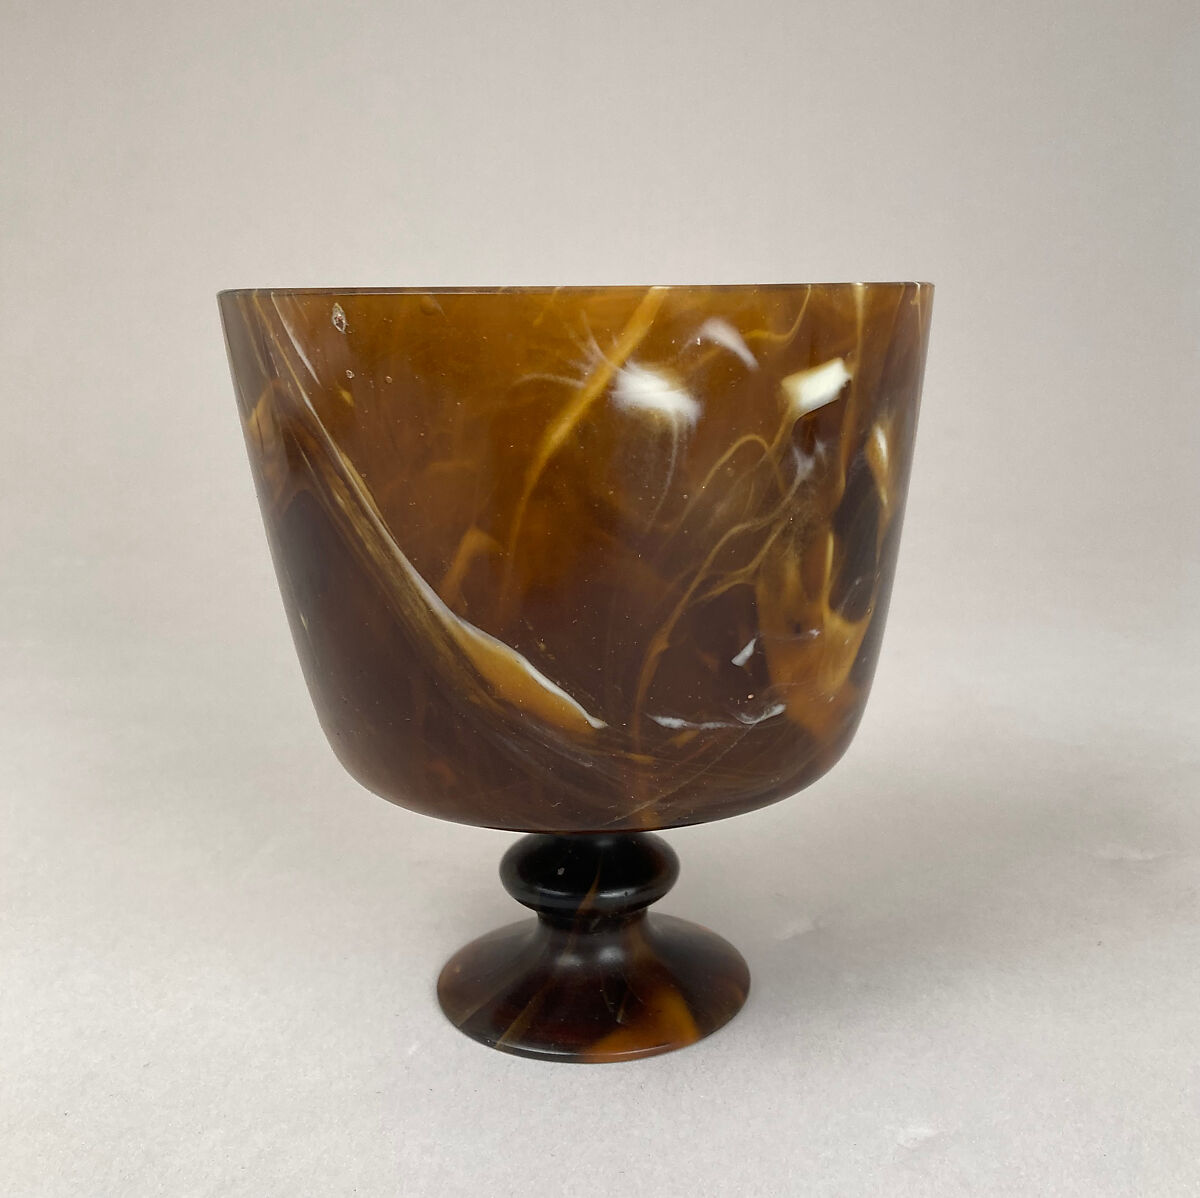 Cup, Probably Venezia-Murano Company (Italian 1872–1909), Glass, Italian, Venice (Murano) 